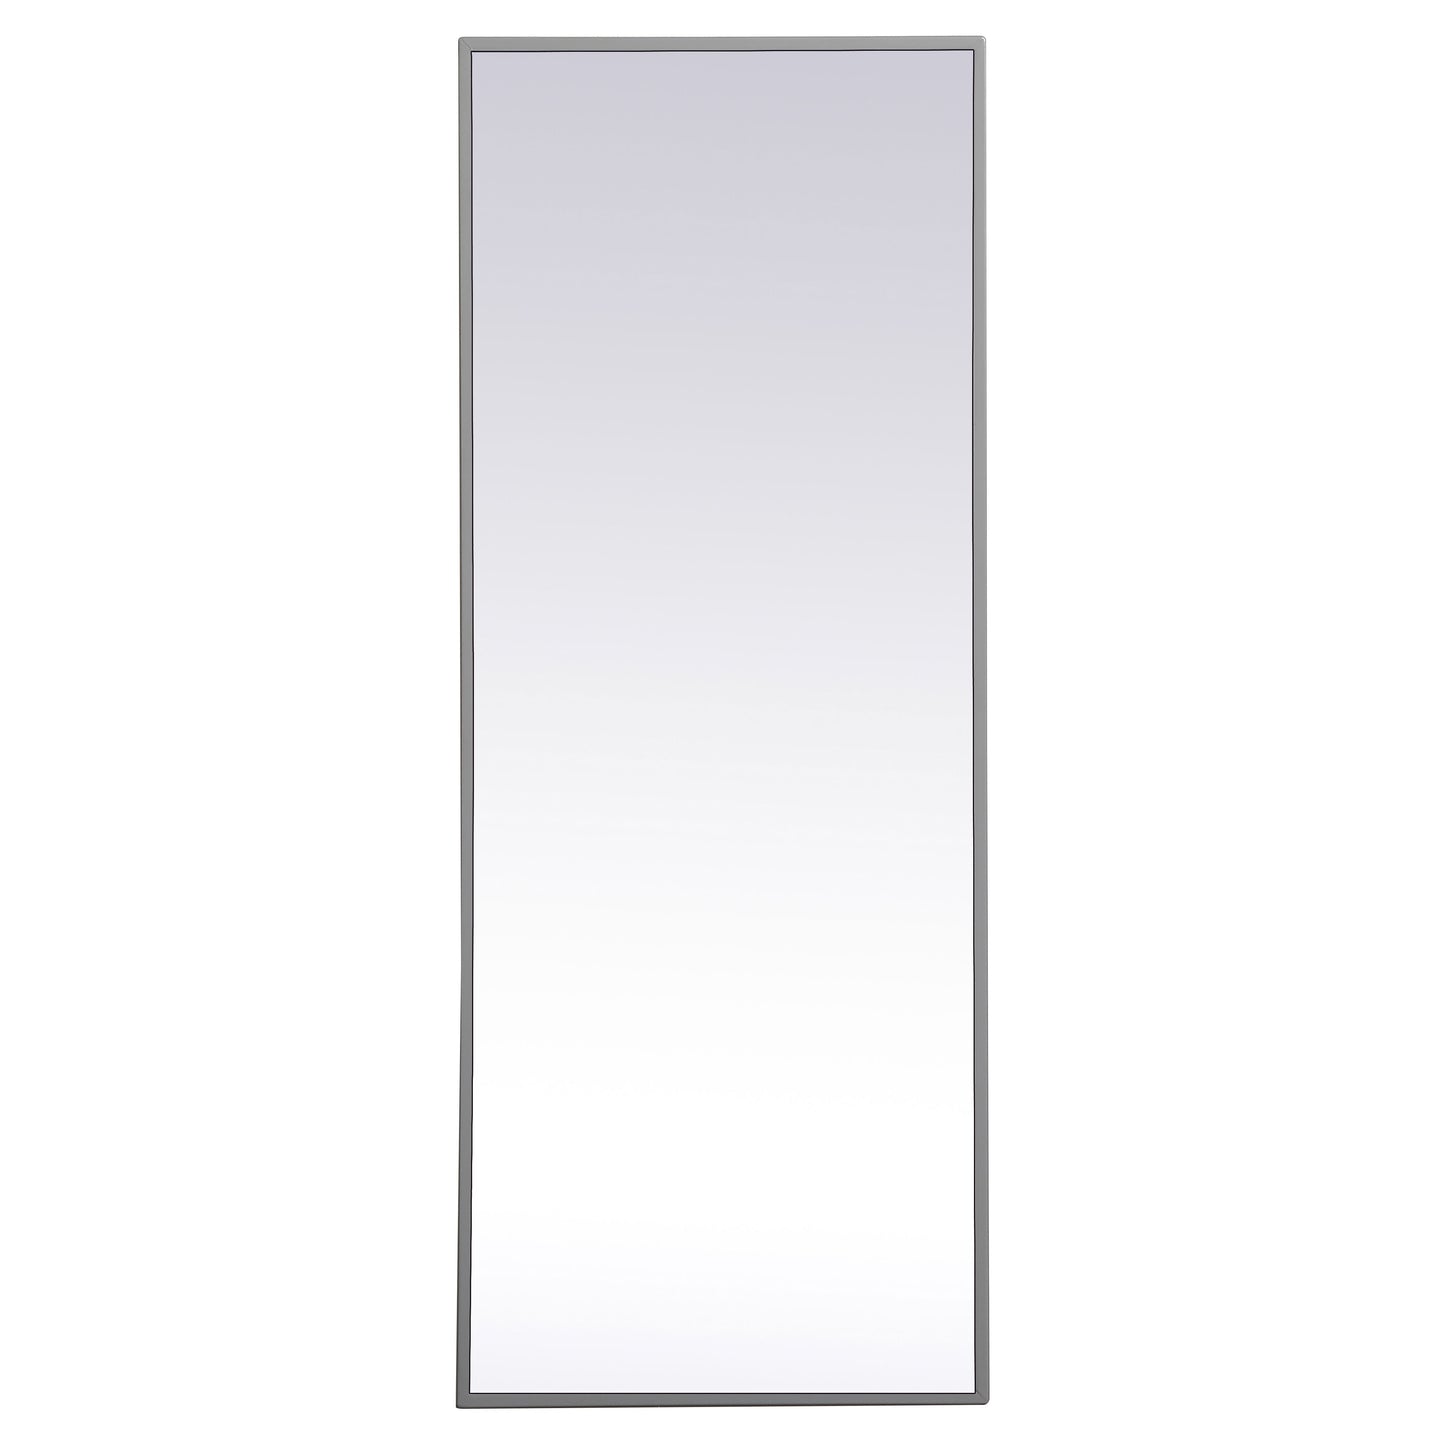 MR41436GR Monet 14" x 36" Metal Framed Rectangular Mirror in Grey